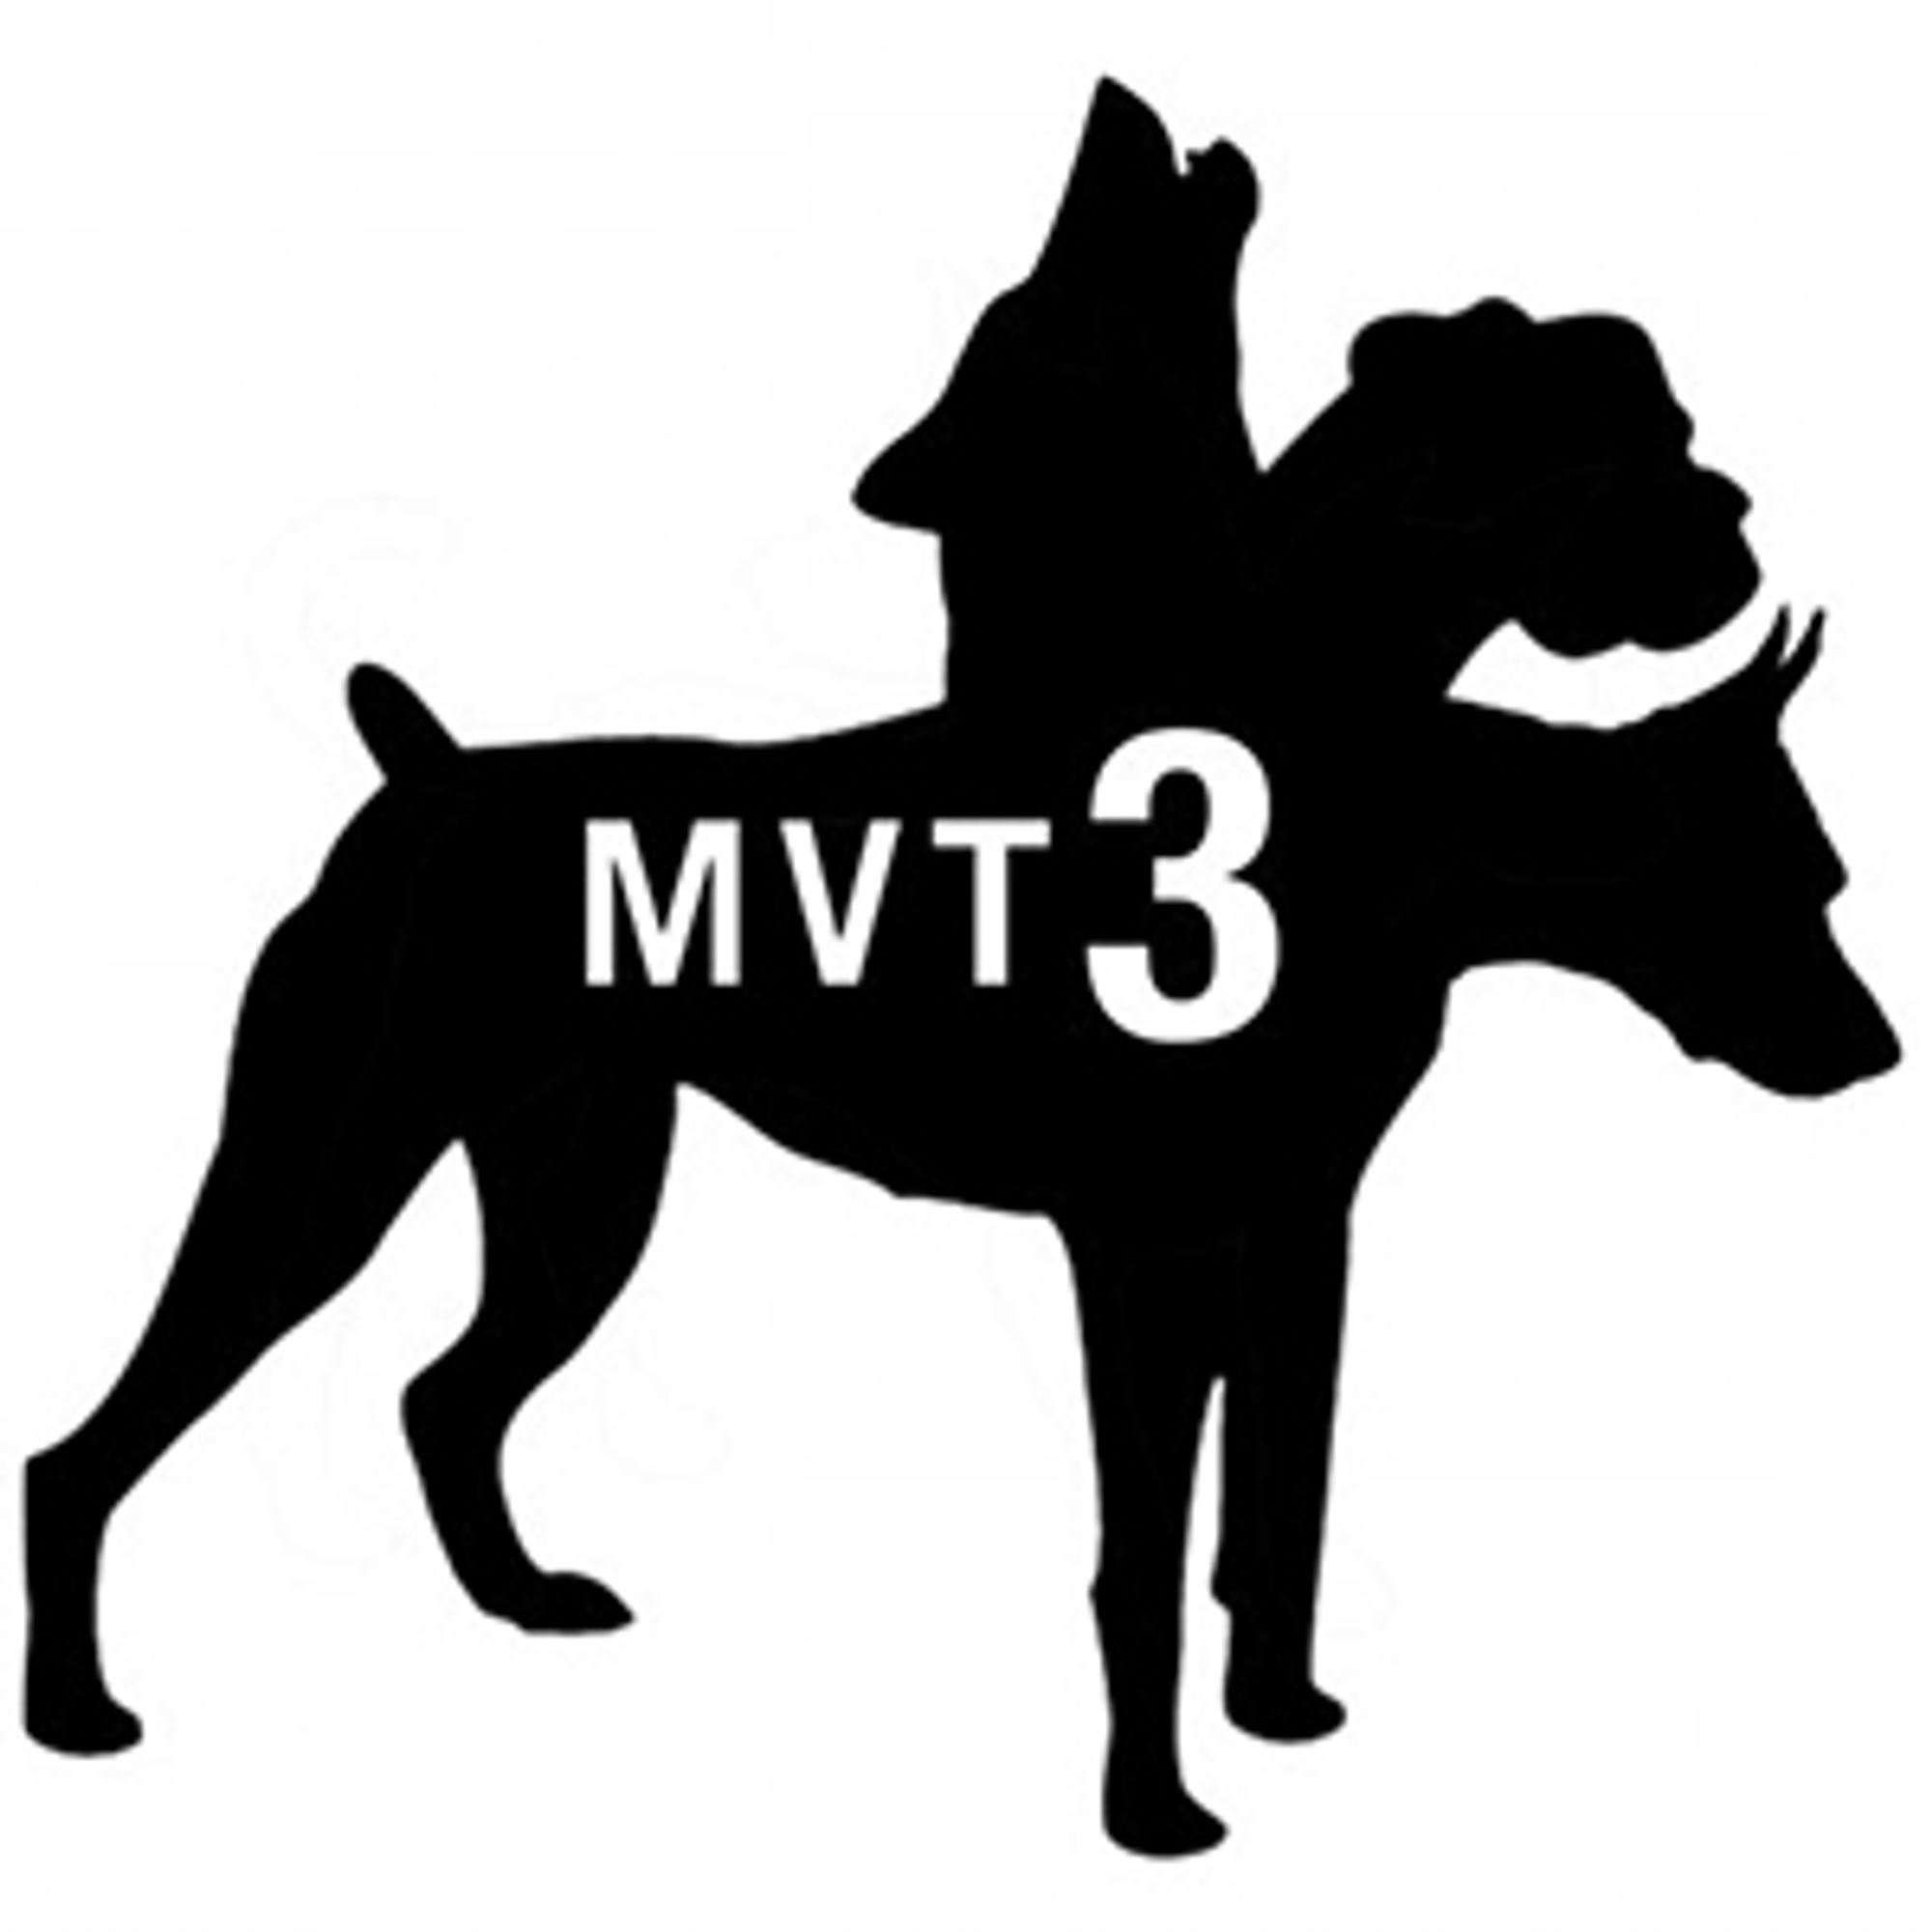 mvt3-web